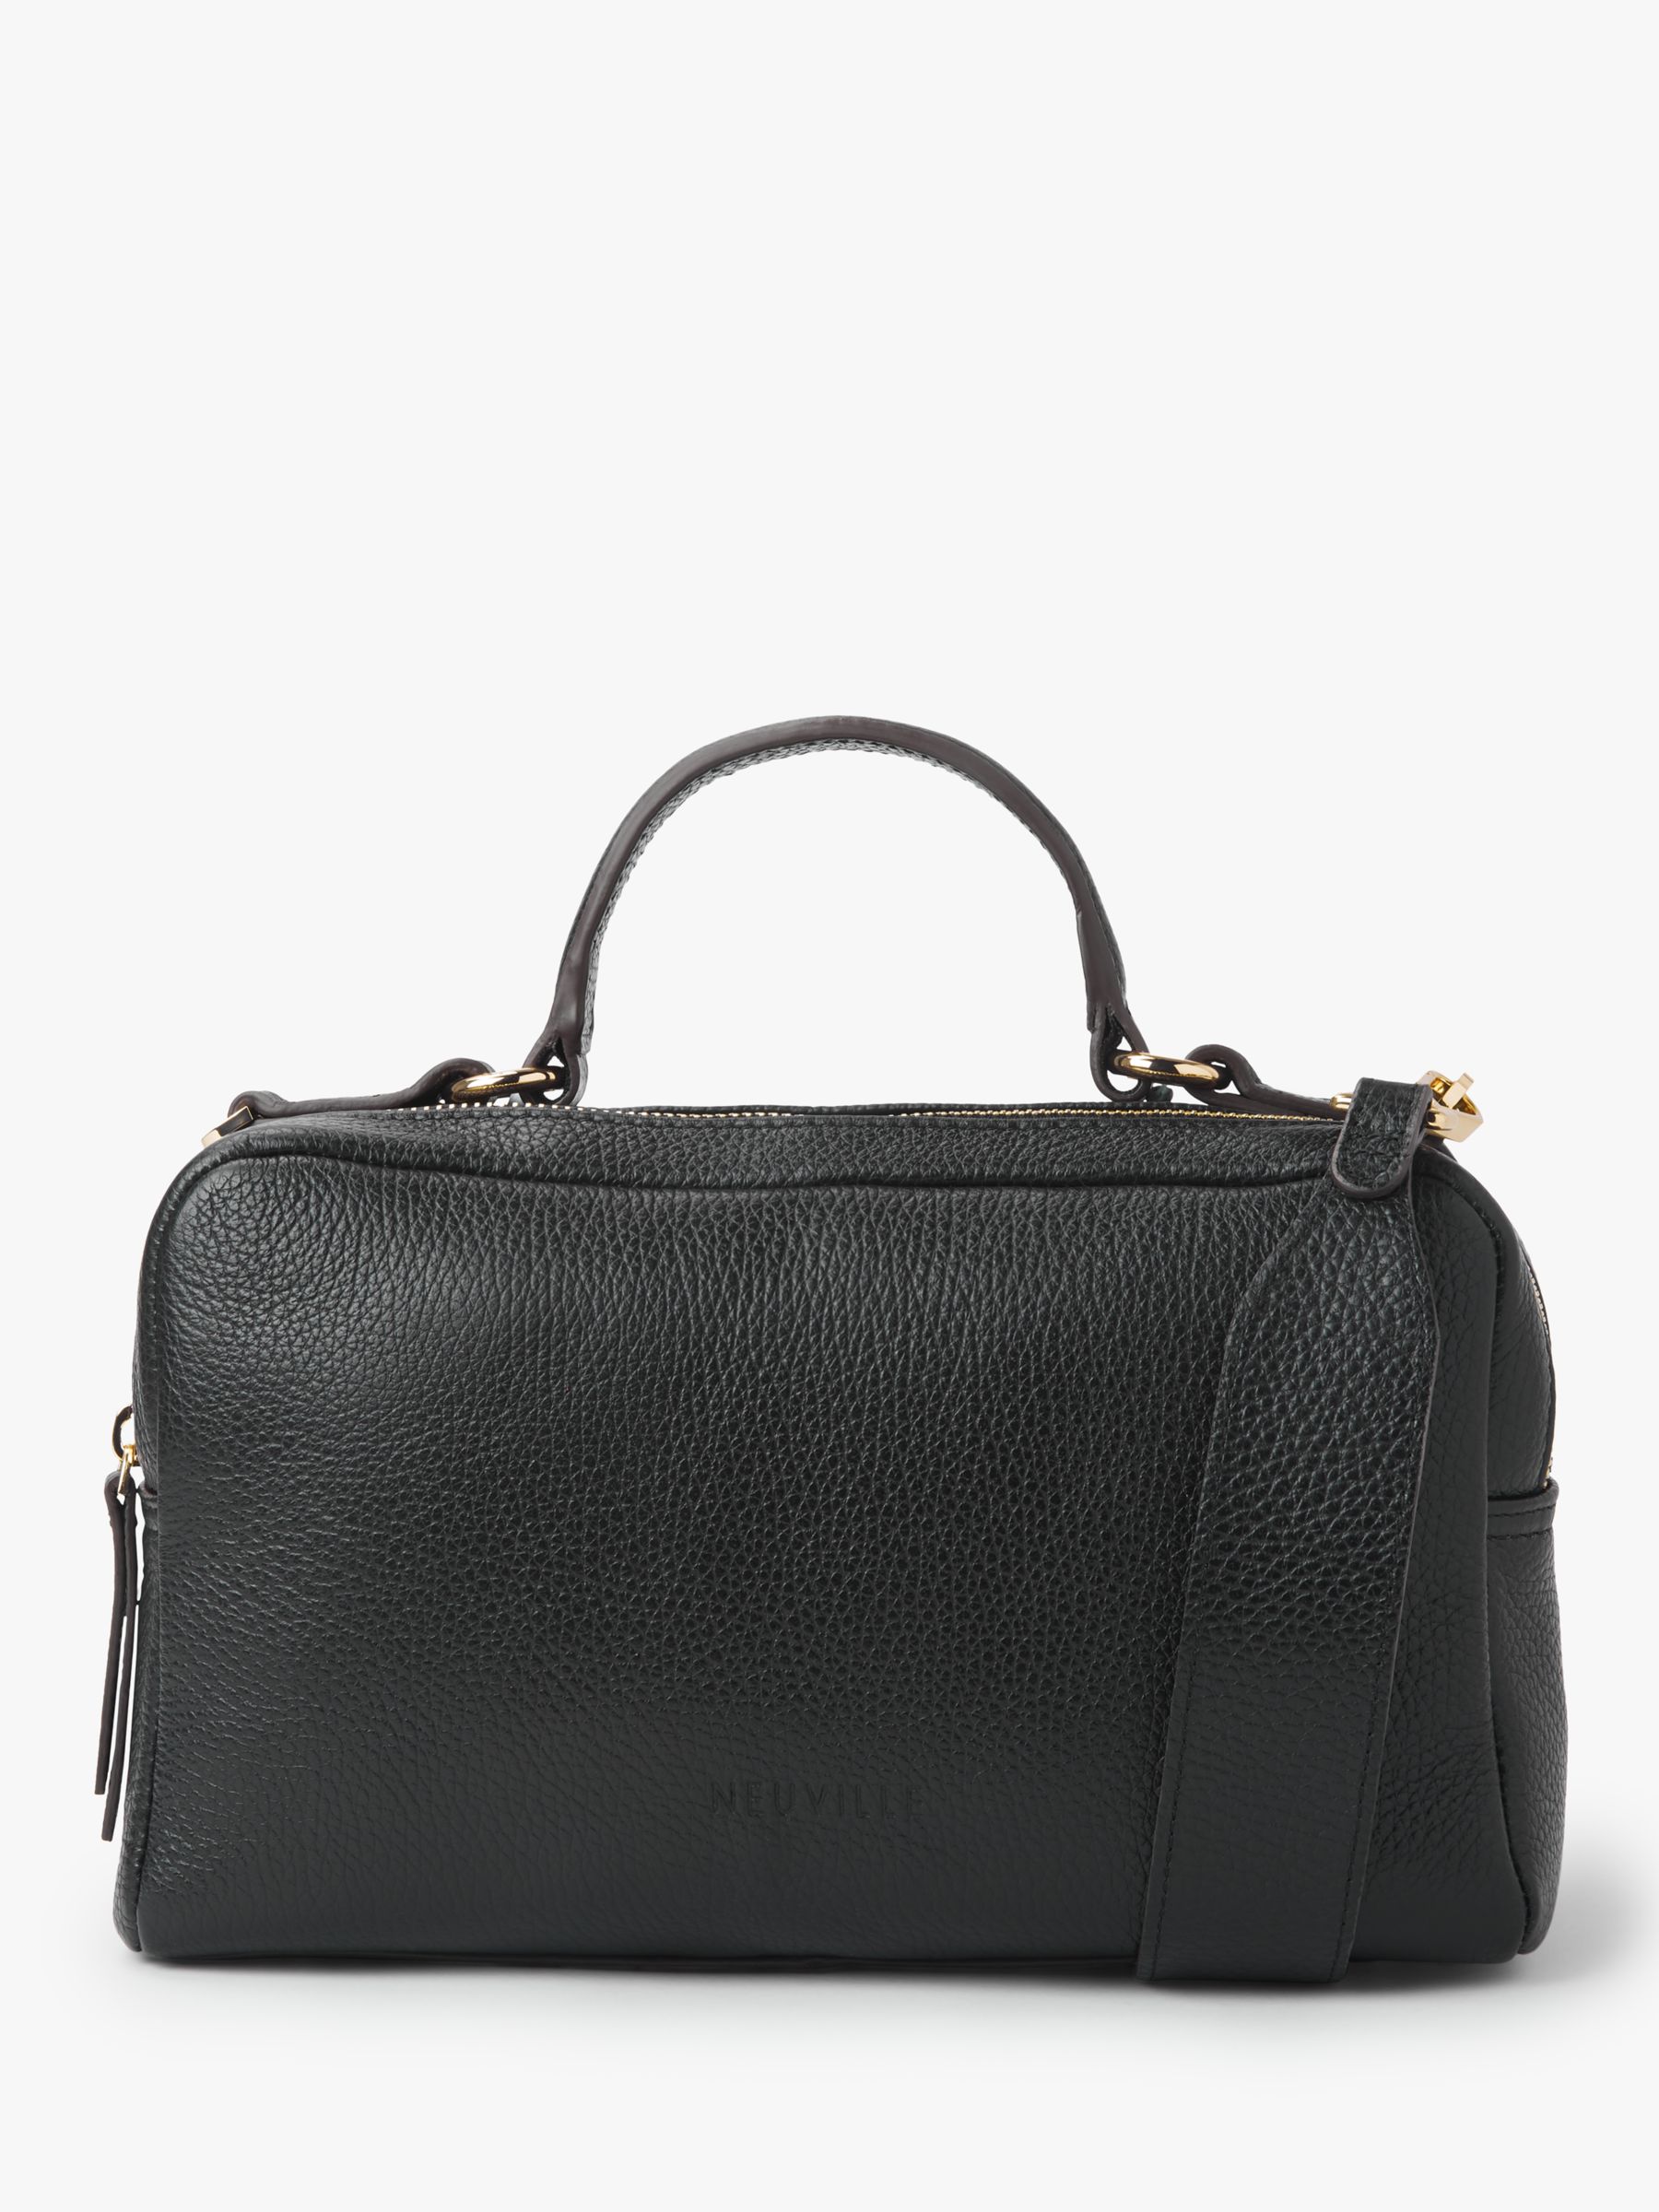 Neuville Leather Top Handle Satchel Bag at John Lewis & Partners